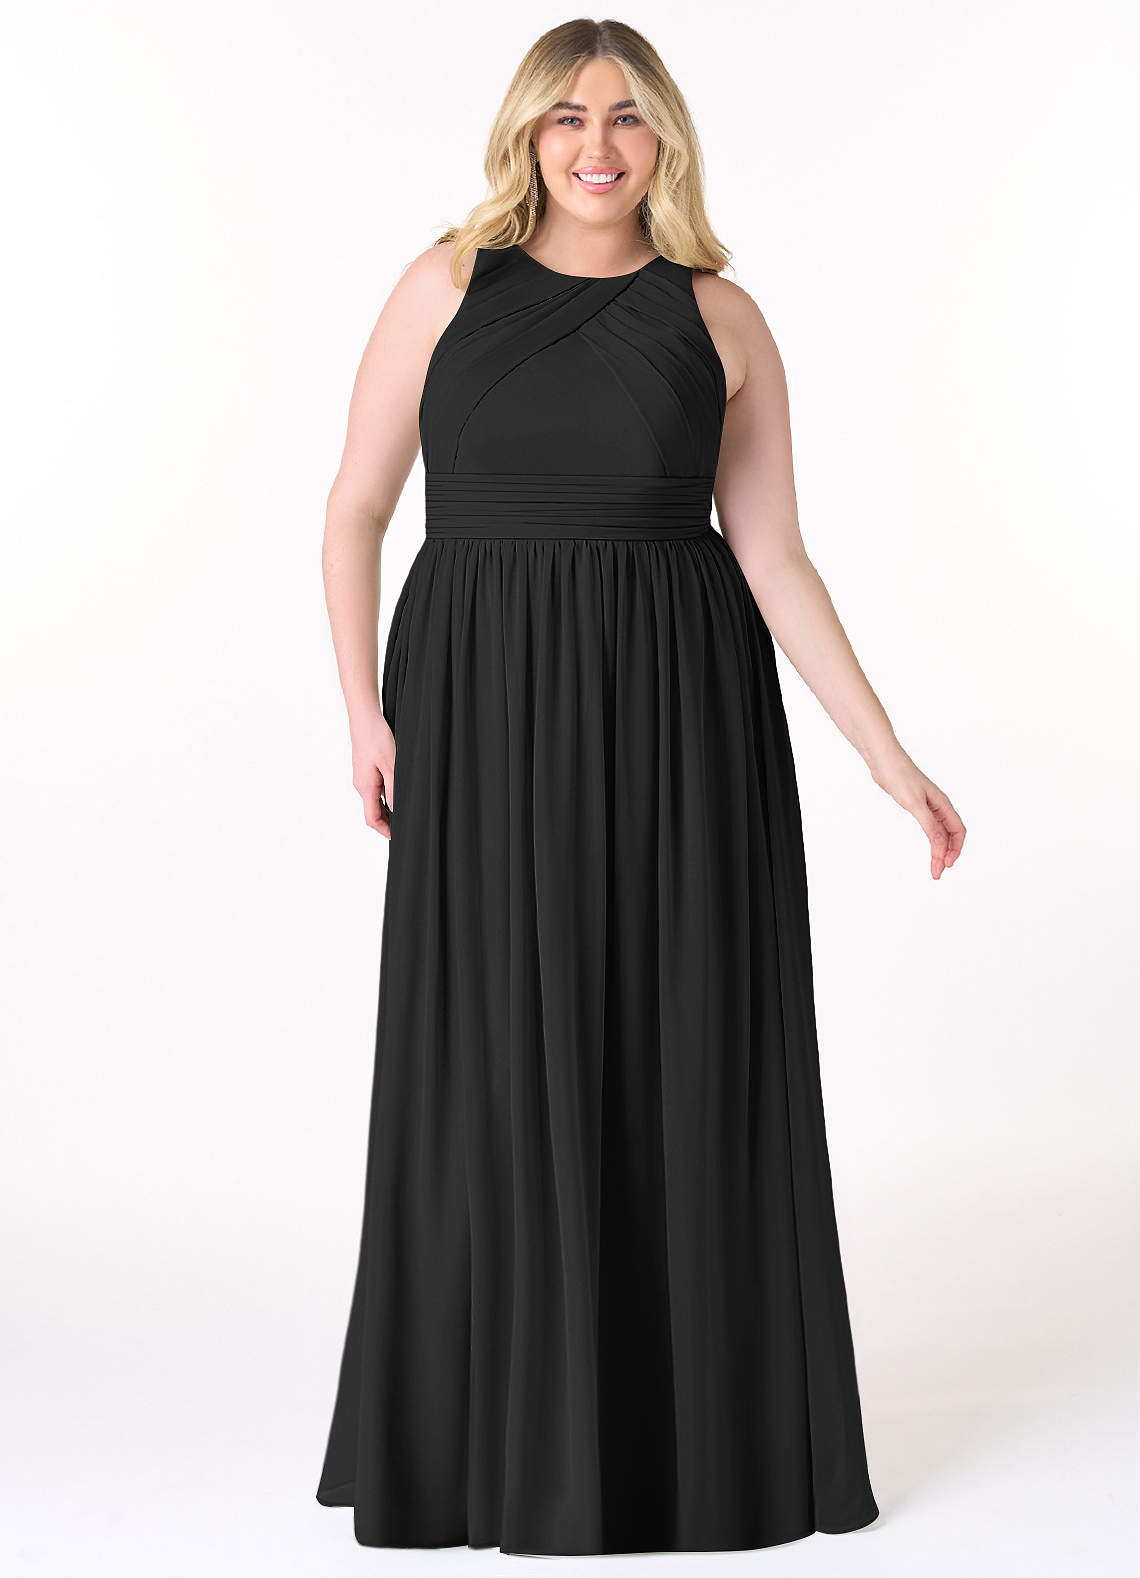 Azazie Harper Bridesmaid Dresses A-Line Pleated Chiffon Floor-Length Dress image1